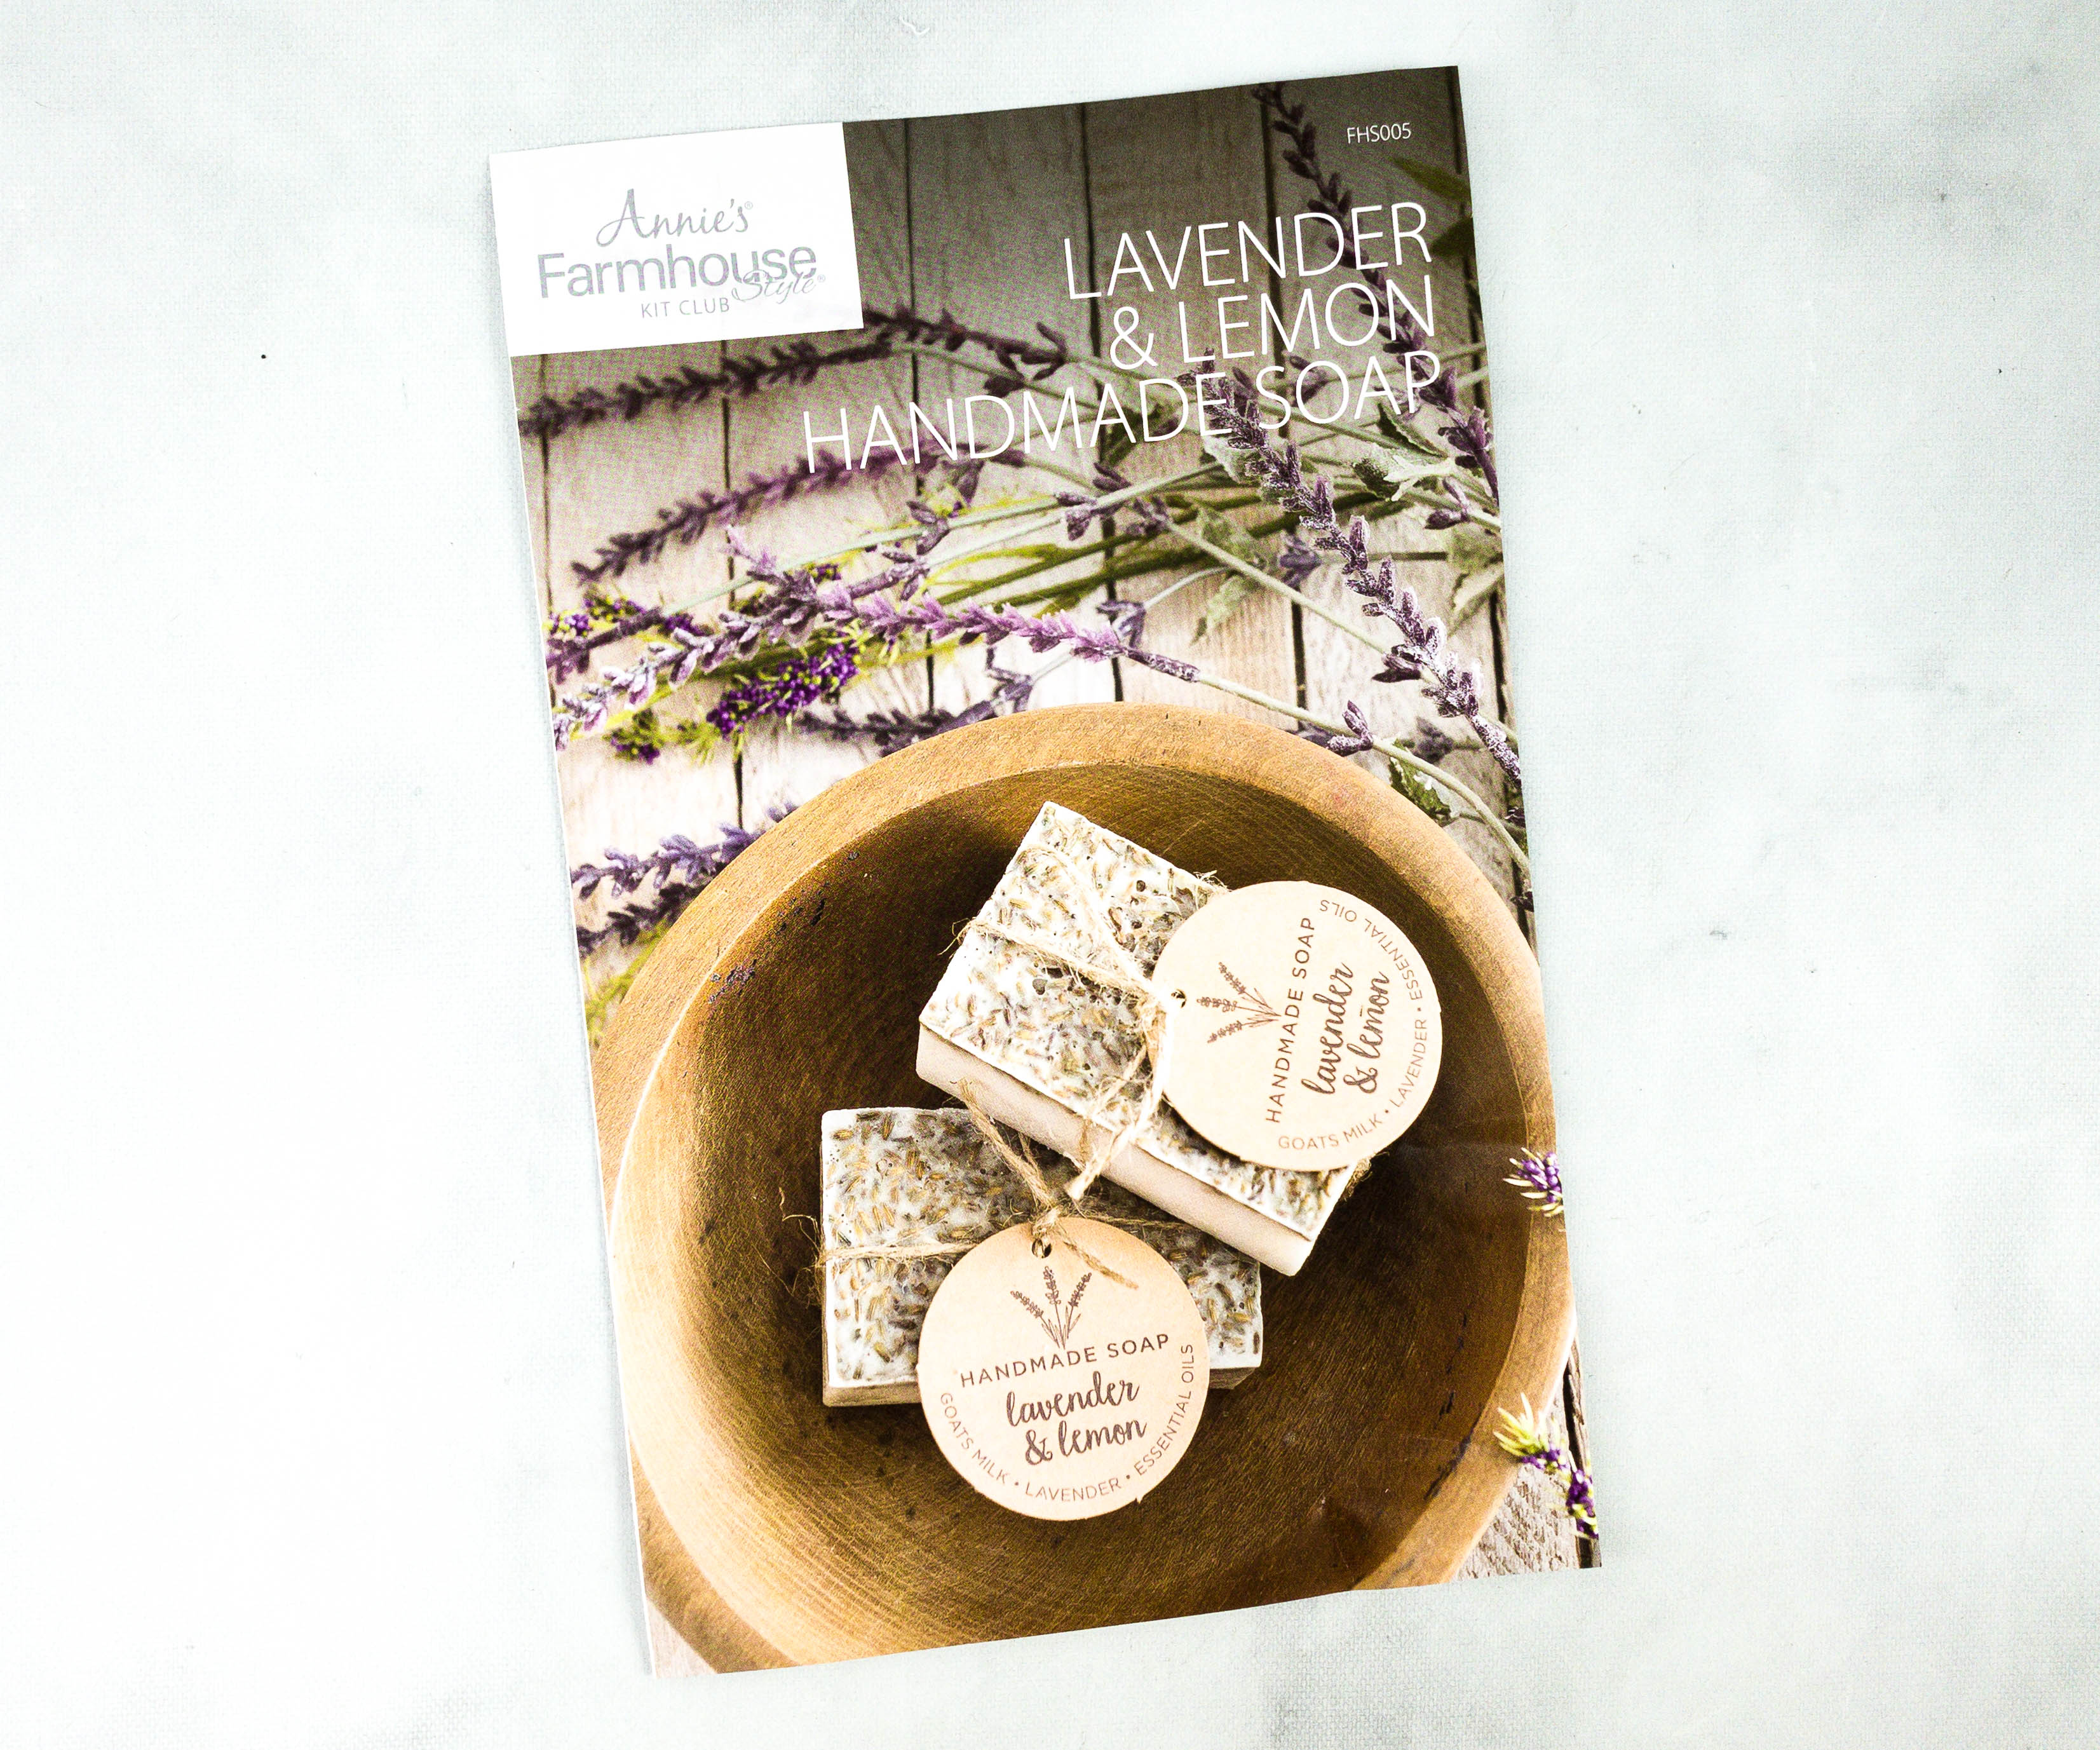 Annies Farmhouse Style Kit Club Review Coupon Lavender Soap Hello Subscription 3148